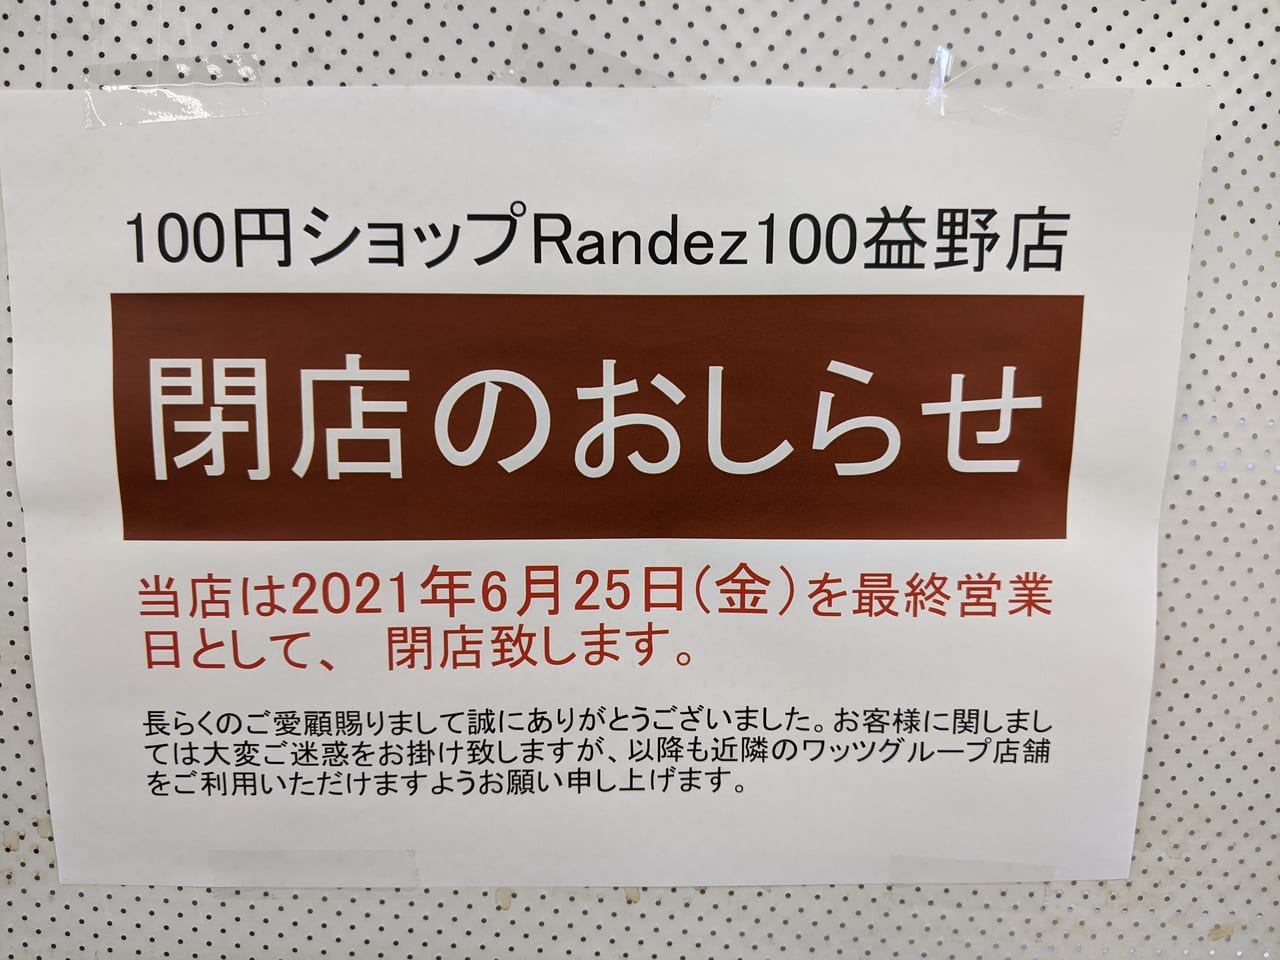 Randez100益野店閉店のお知らせ